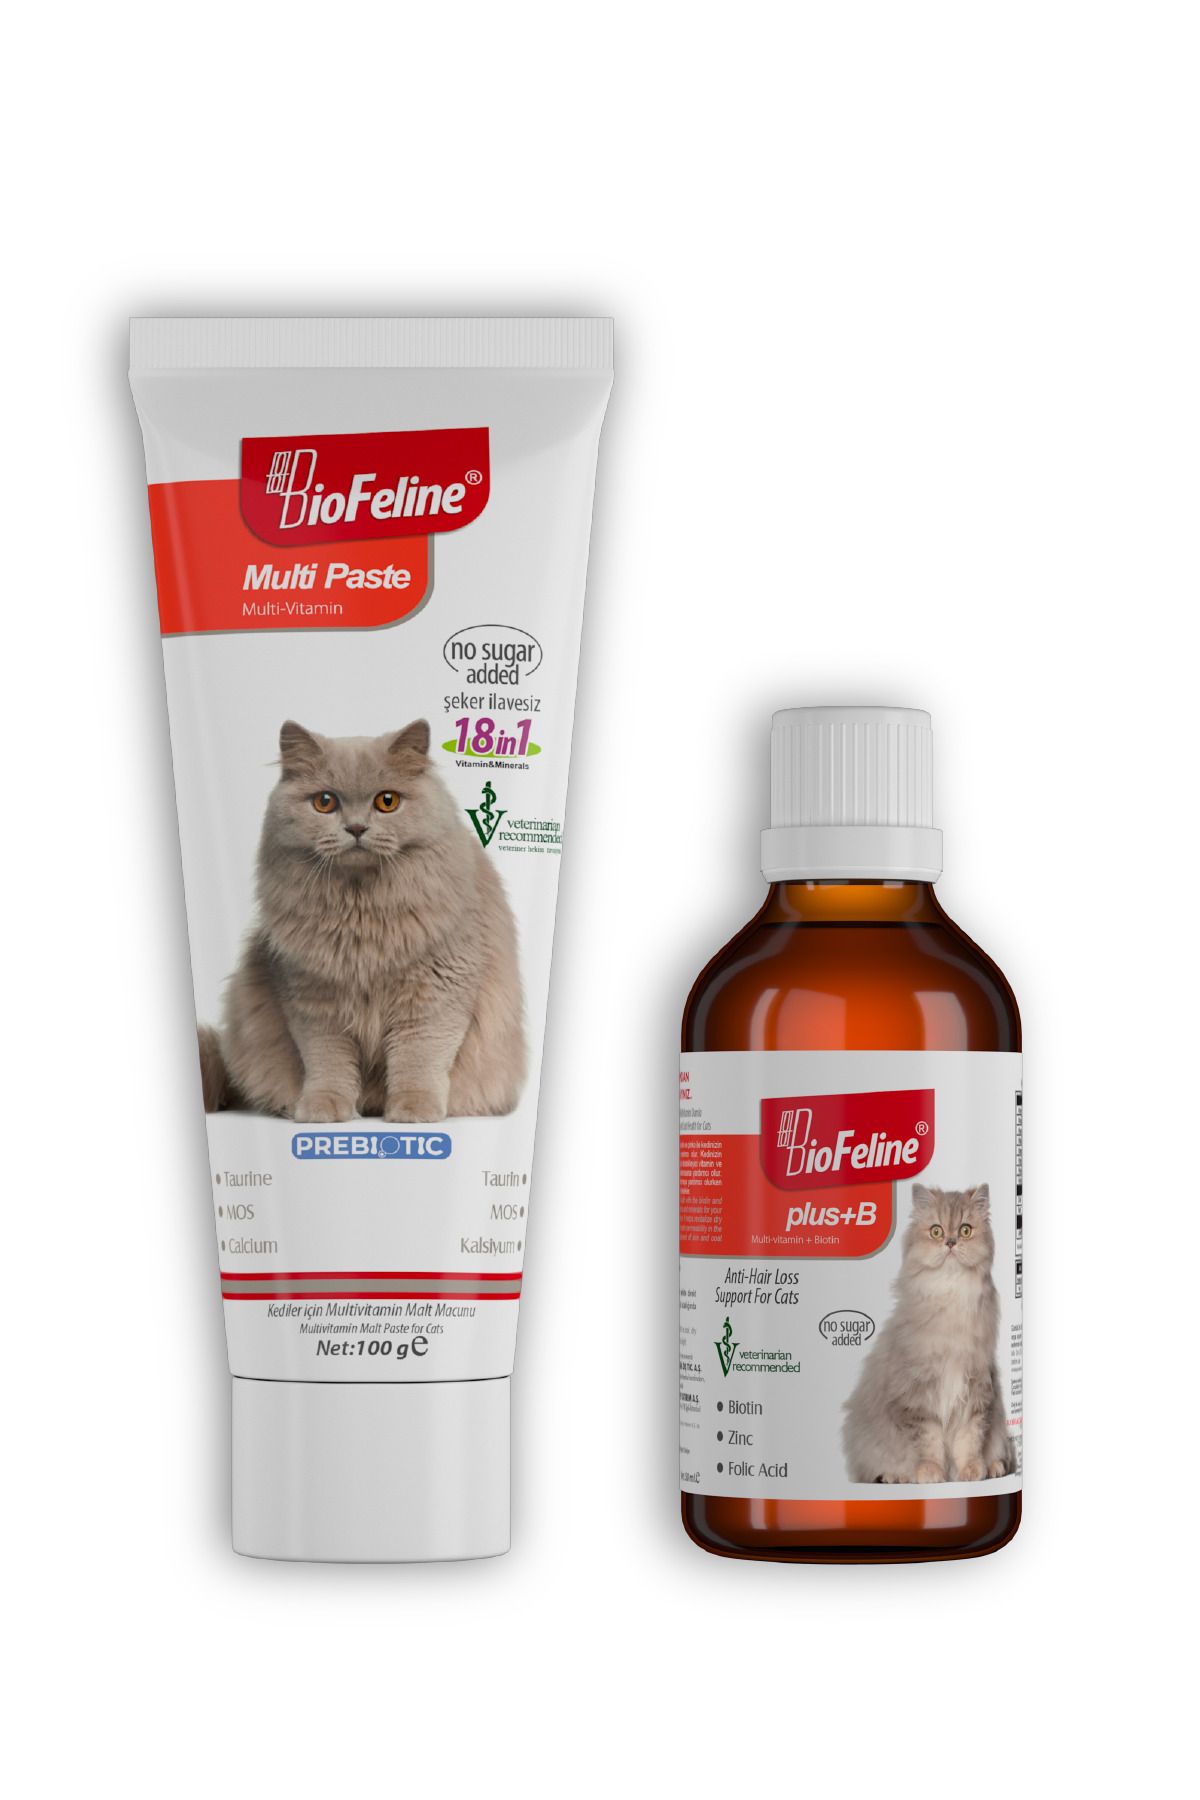 BioFeline Plus+b For Cats 50ml & Multi Paste 100g